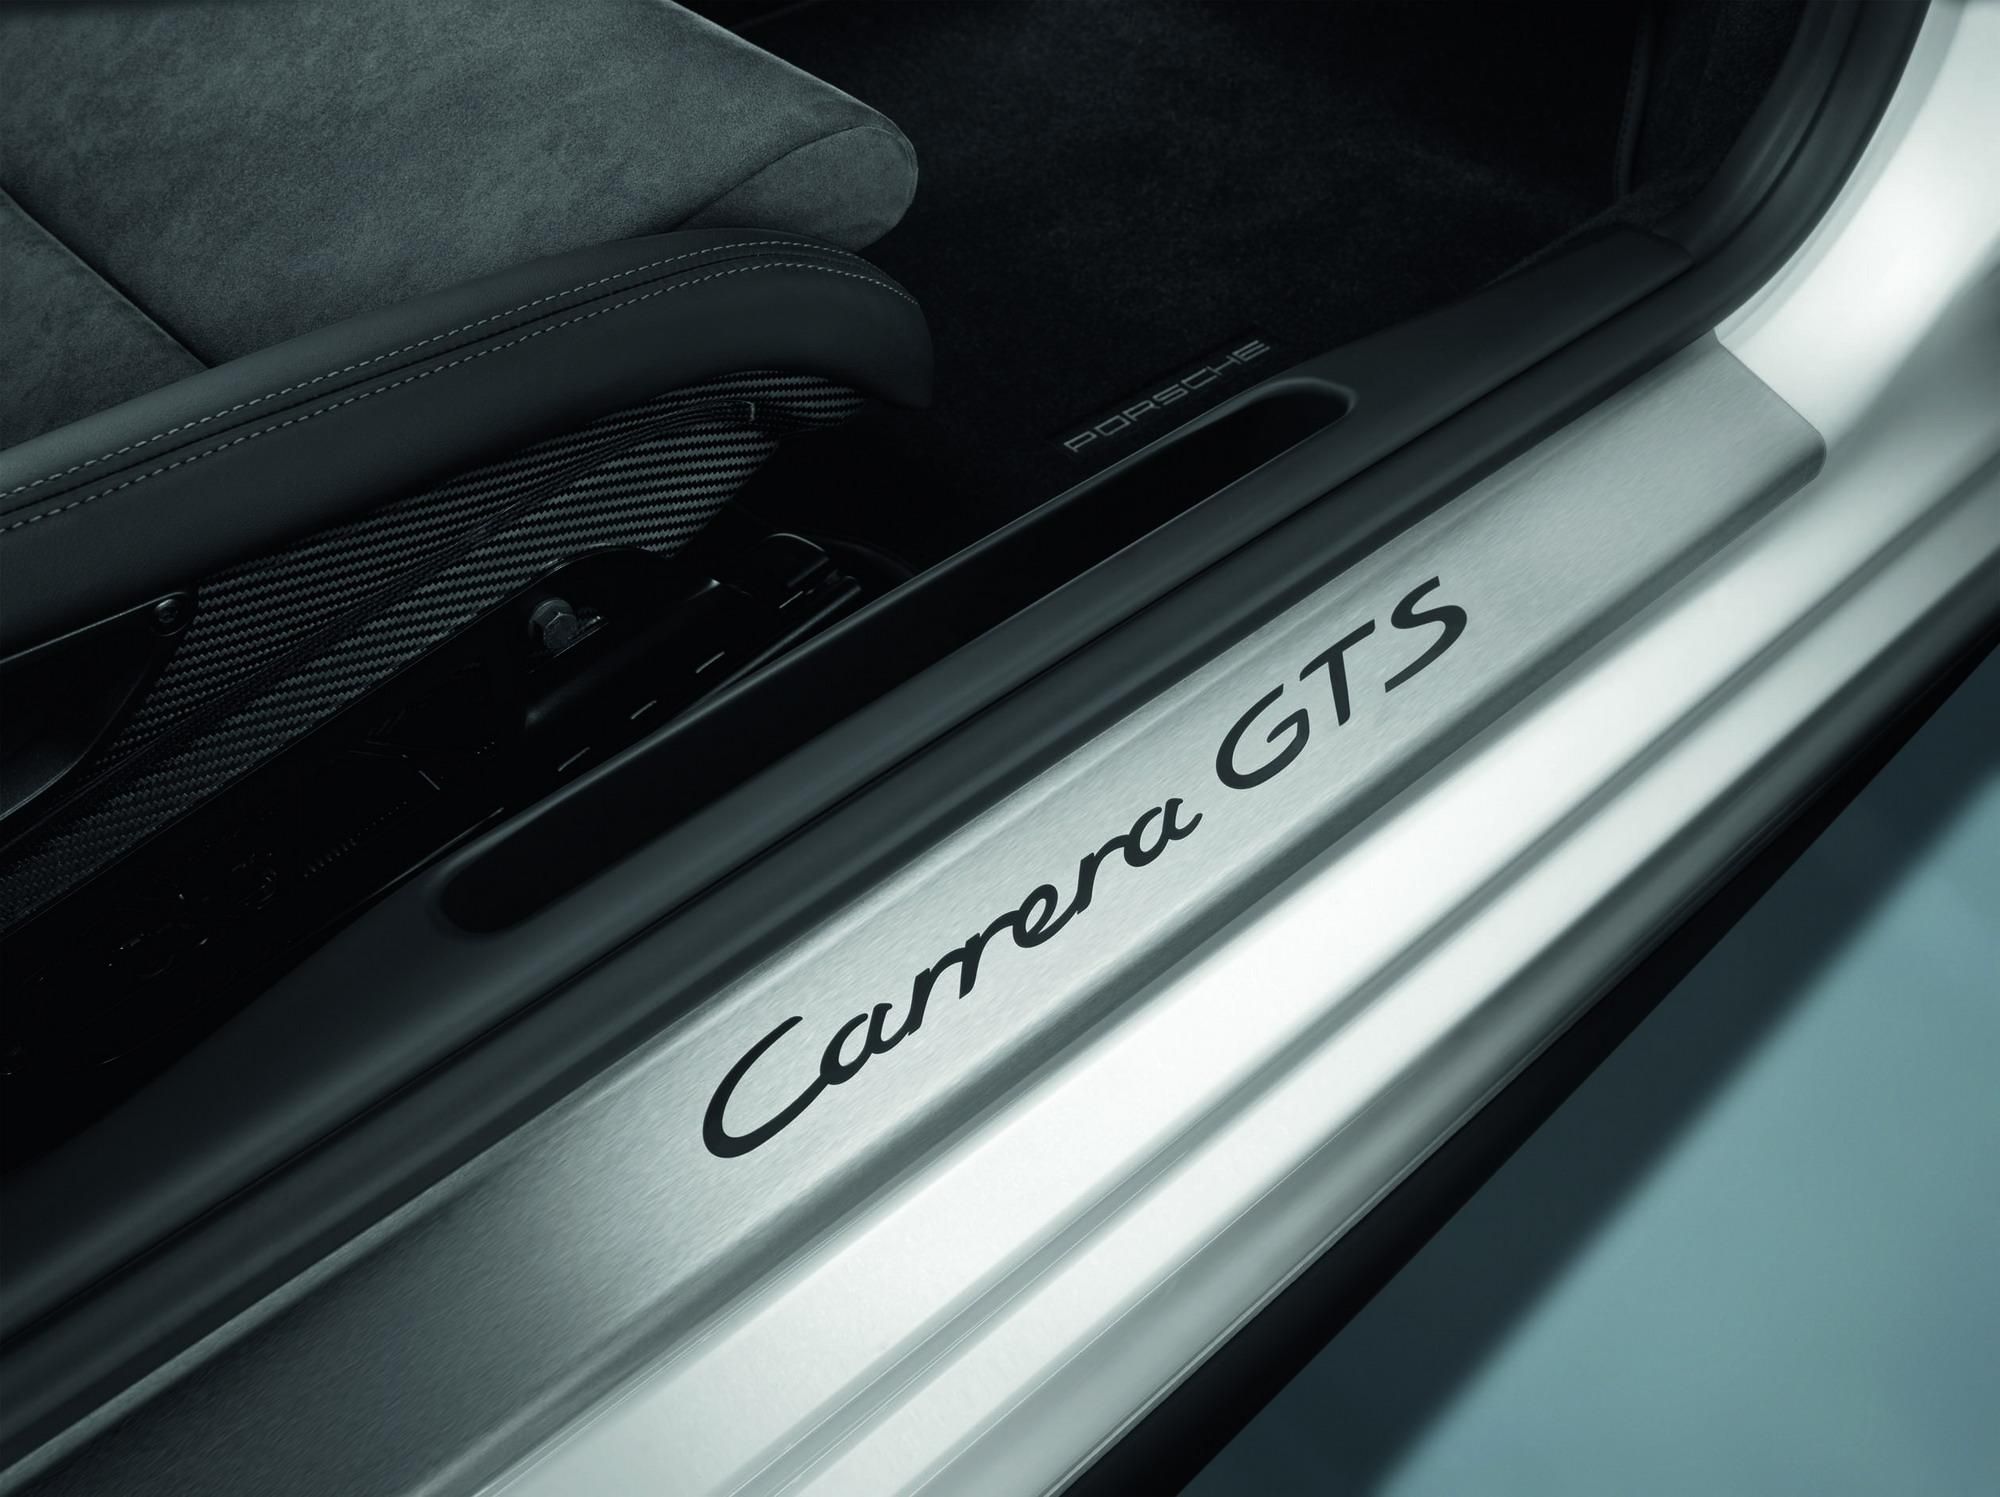 2011 Porsche 911 Carrera GTS